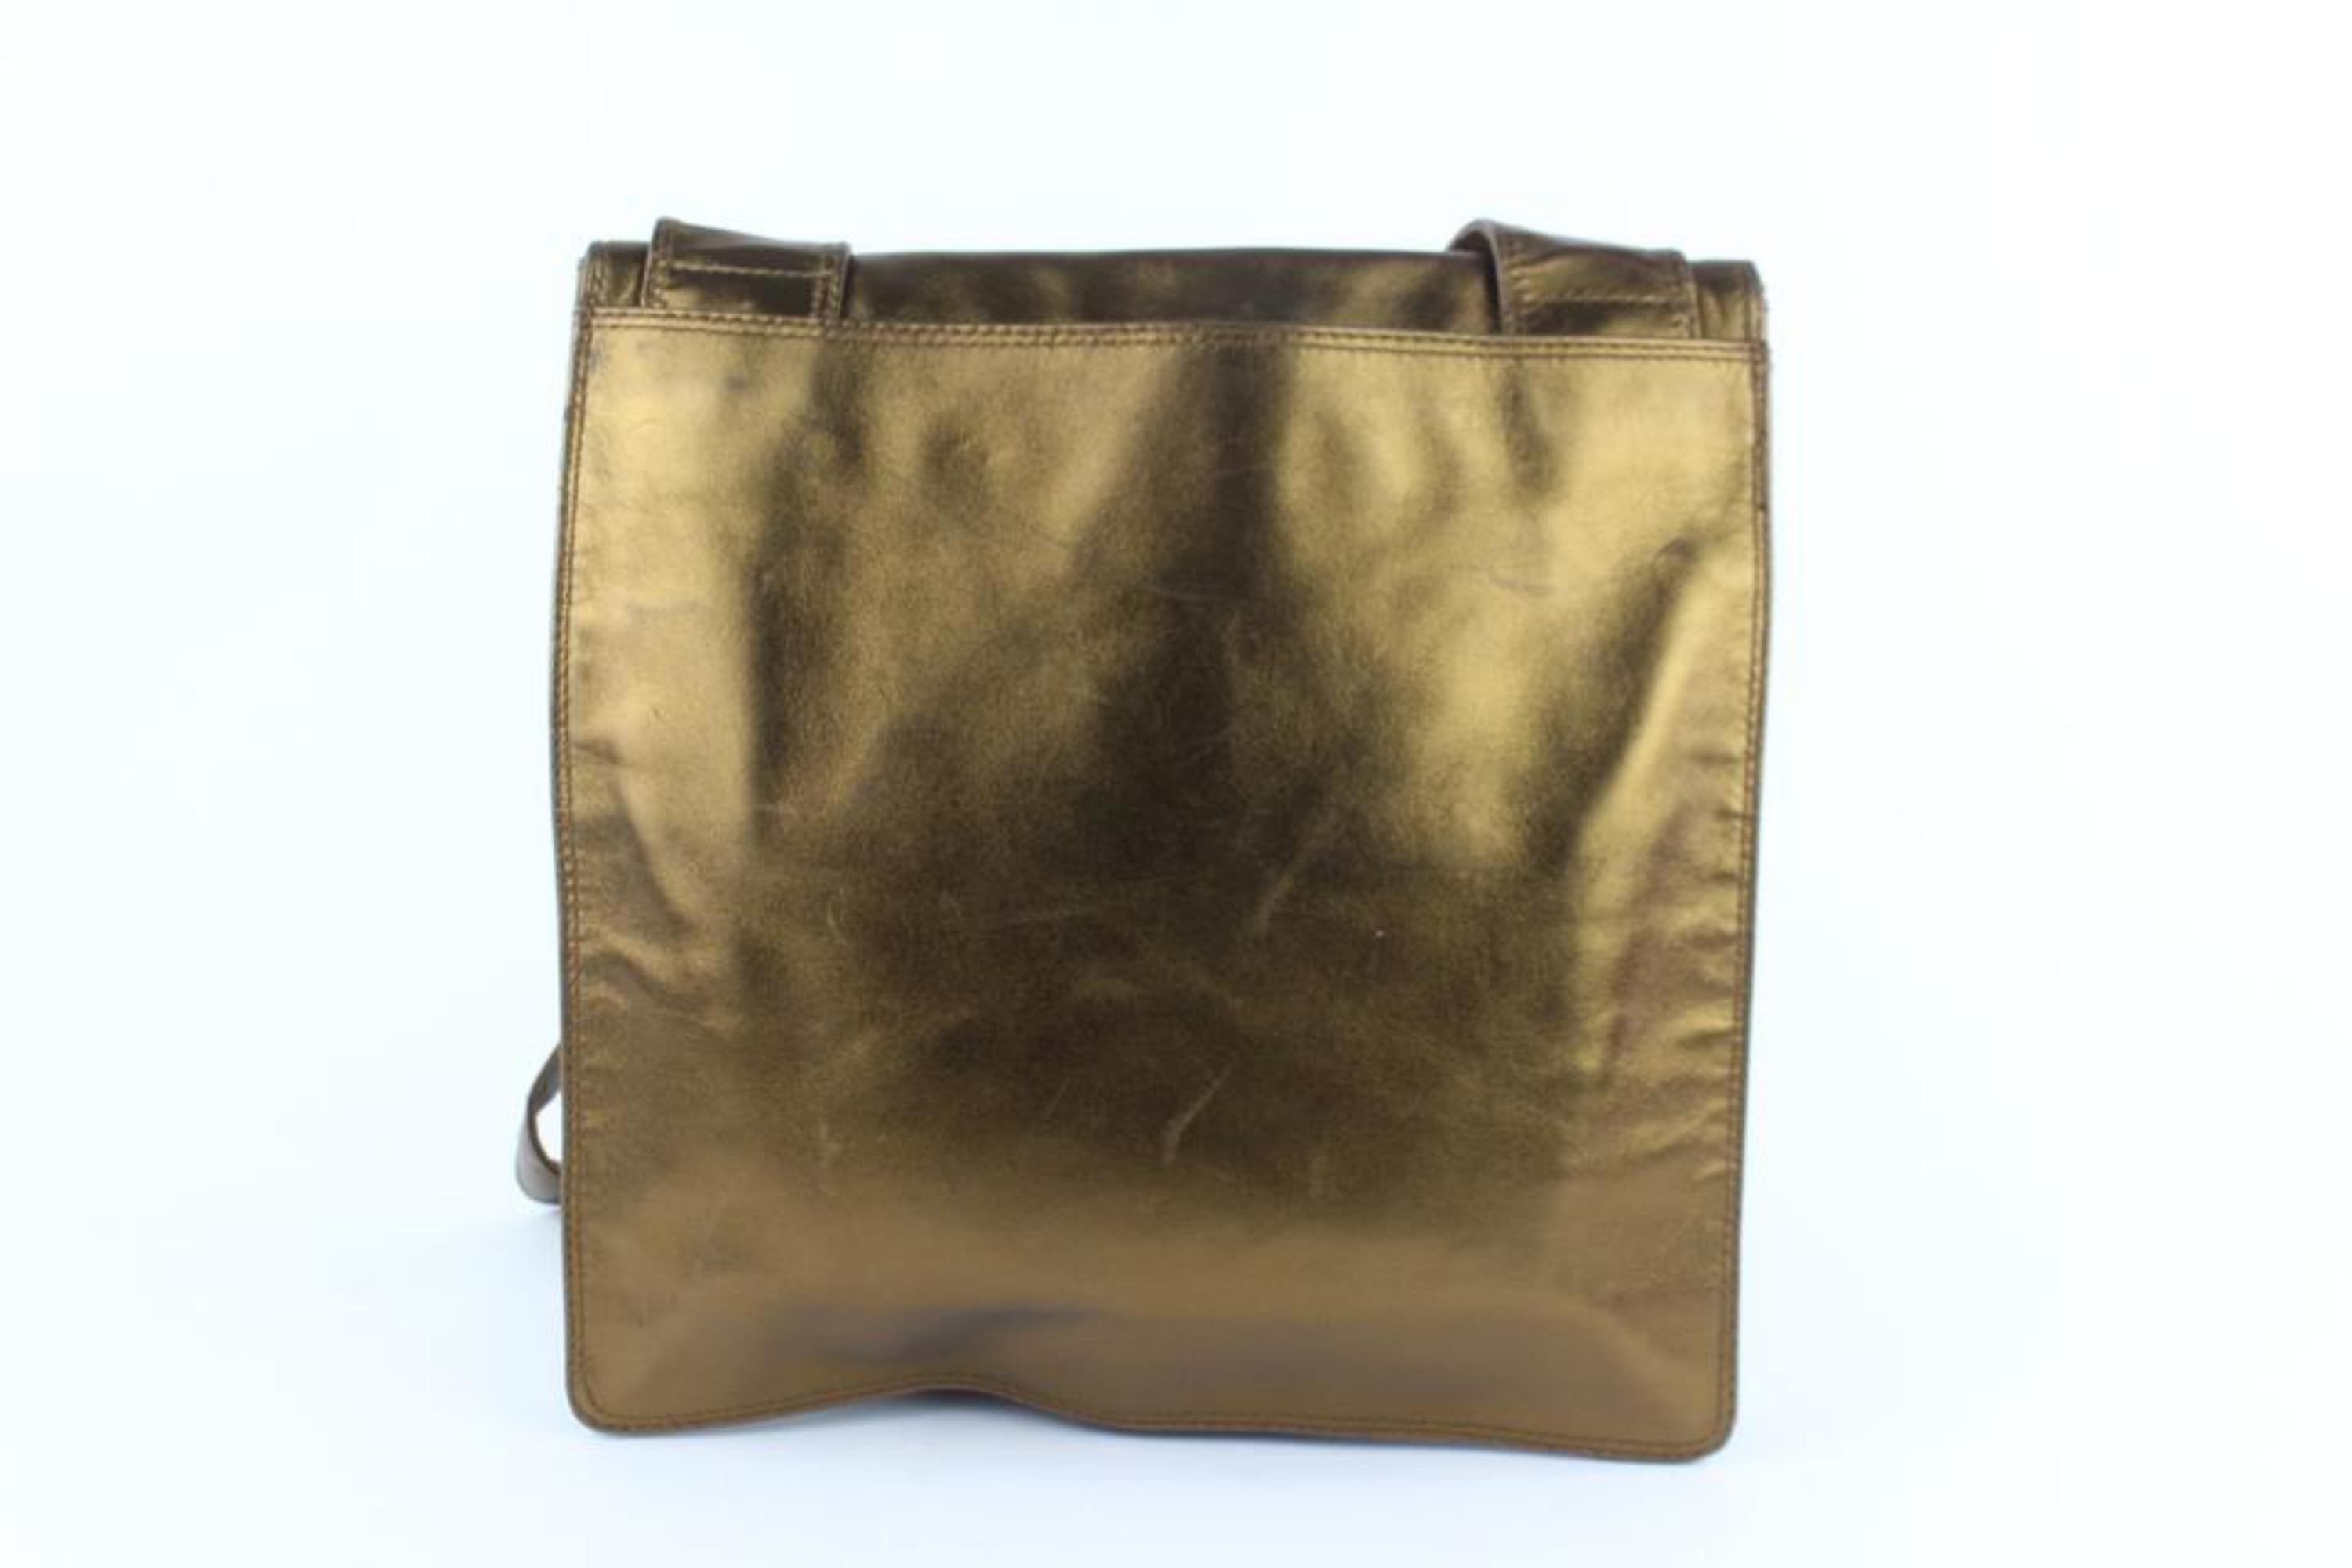 Chanel Messenger Metallic Lambskin Flat 7cz1016 Bronze Leather Cross Body Bag For Sale 1